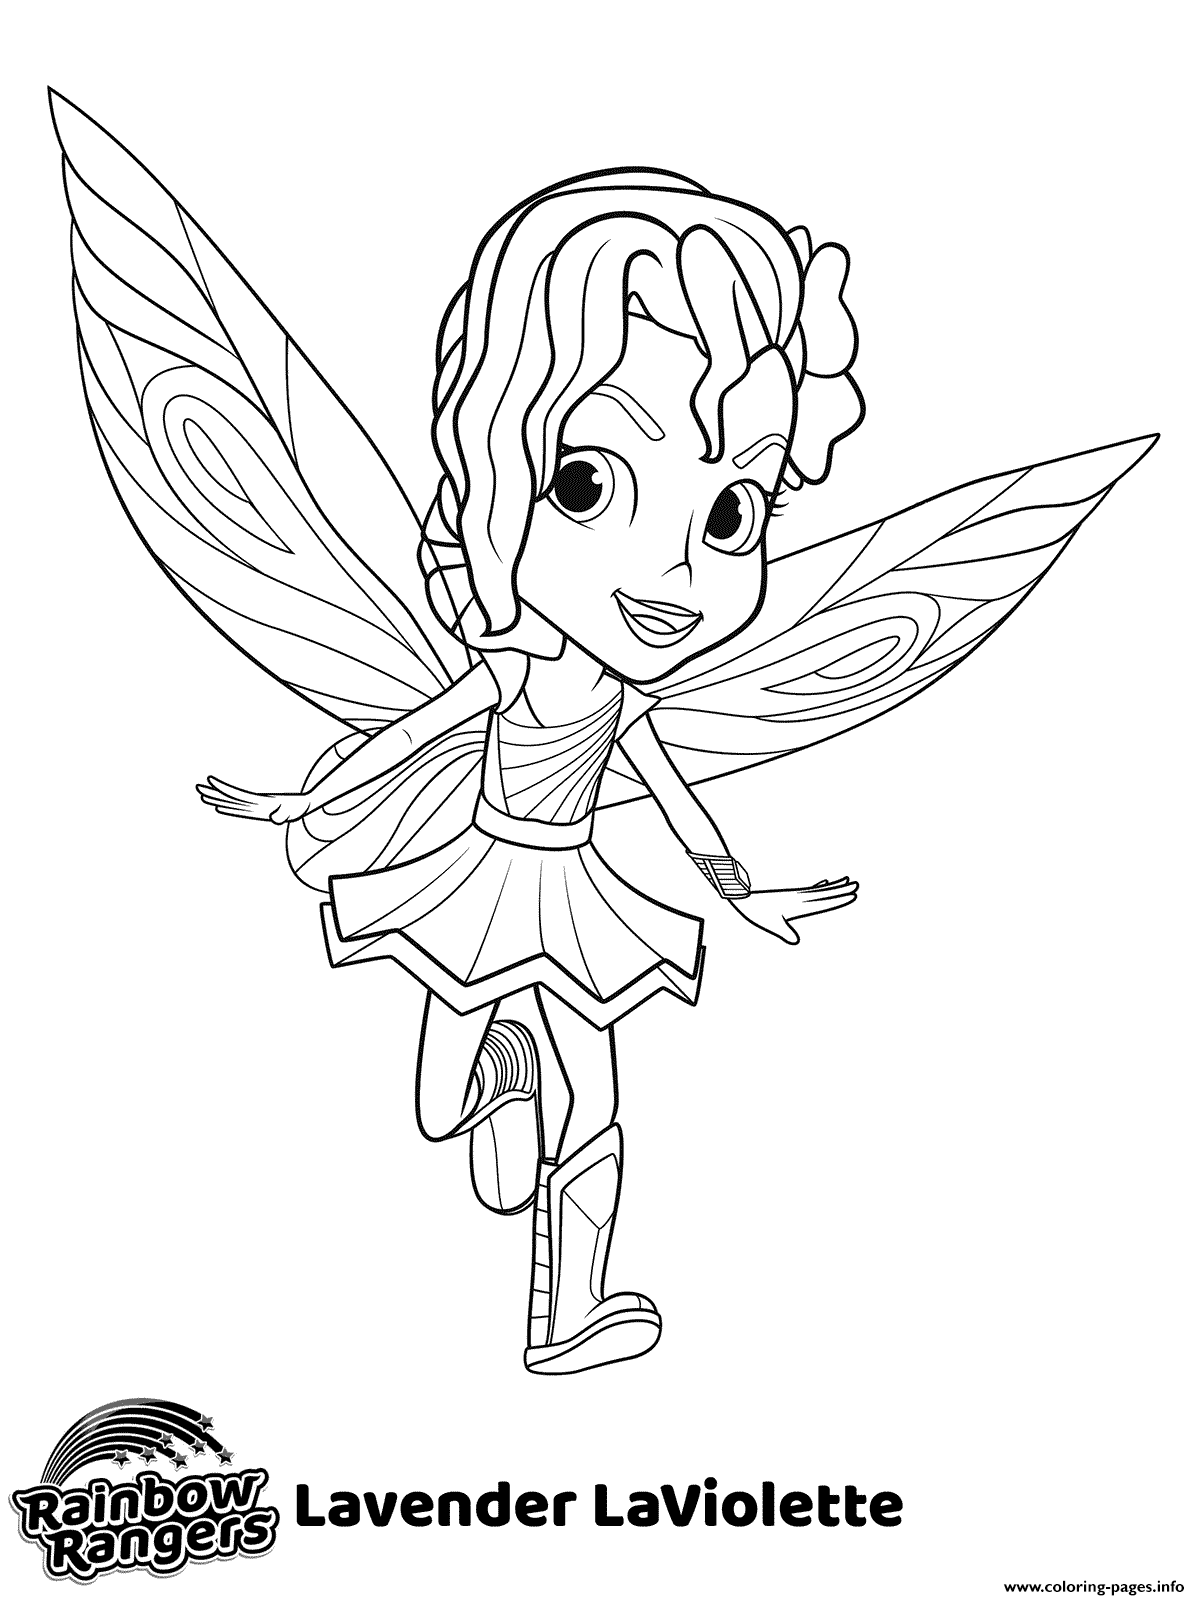 Little Fairy Rainbow Rangers coloring